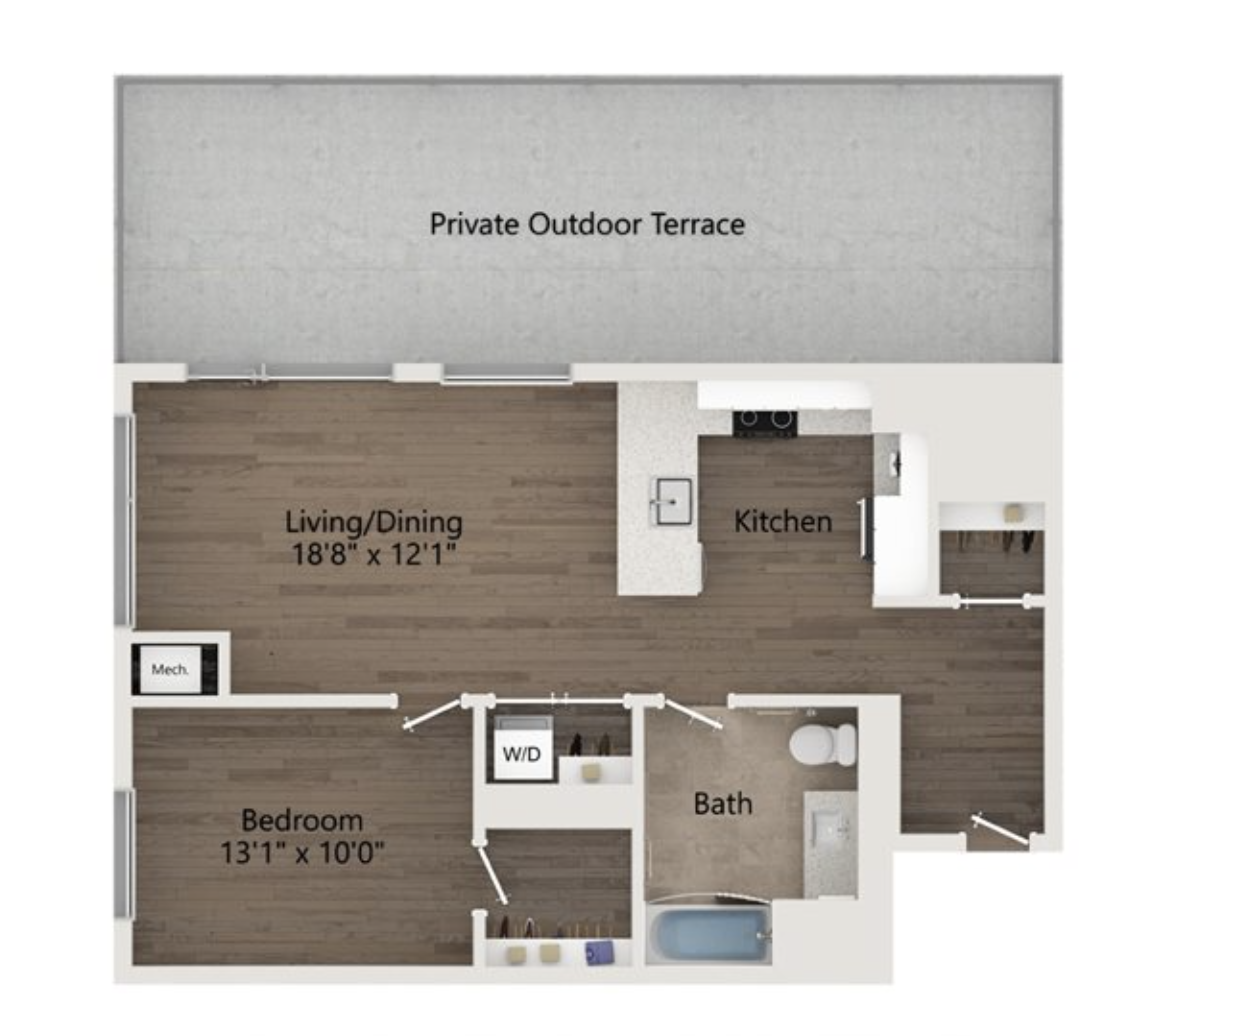 Sample one-bedroom floor plan